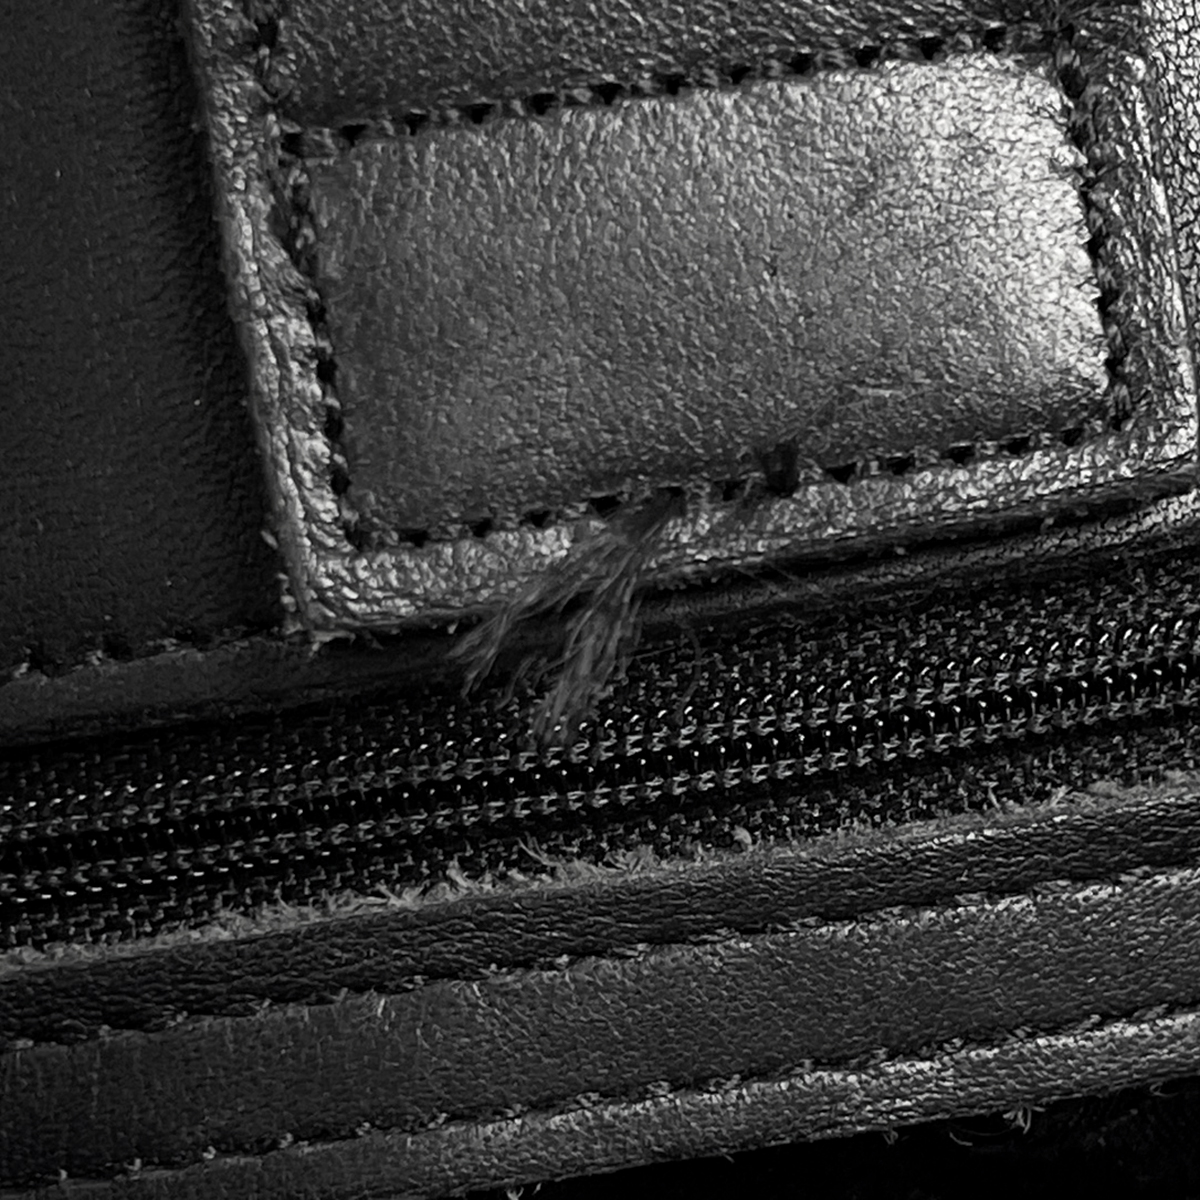  Coach COACH Logo handbag Old Coach handbag leather black 6007 lady's used 